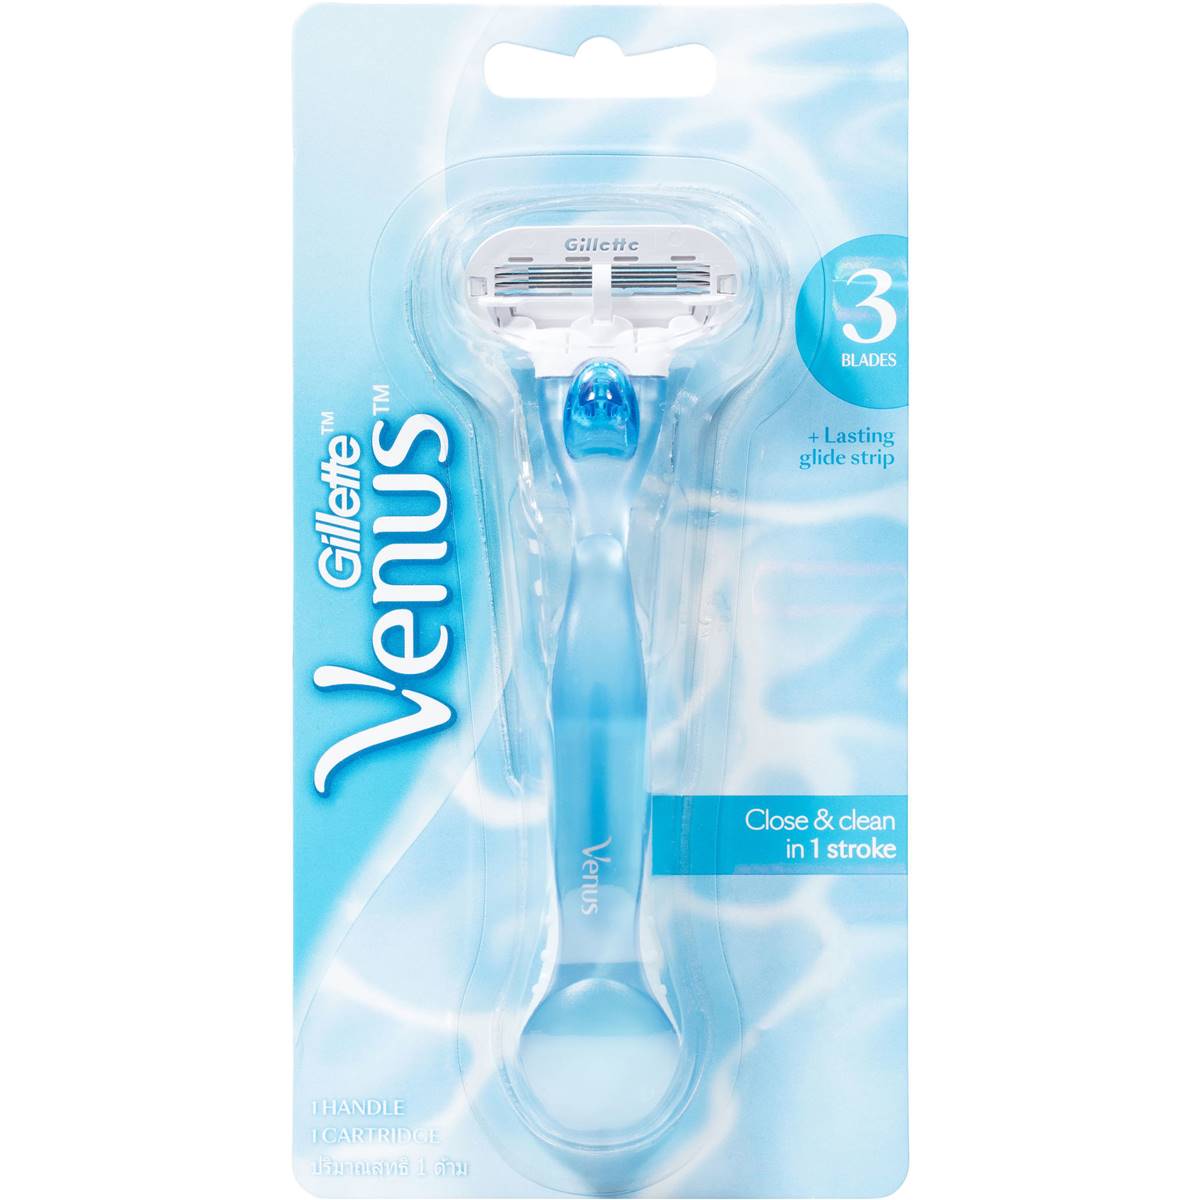 Gillette Venus Shaving Razor 